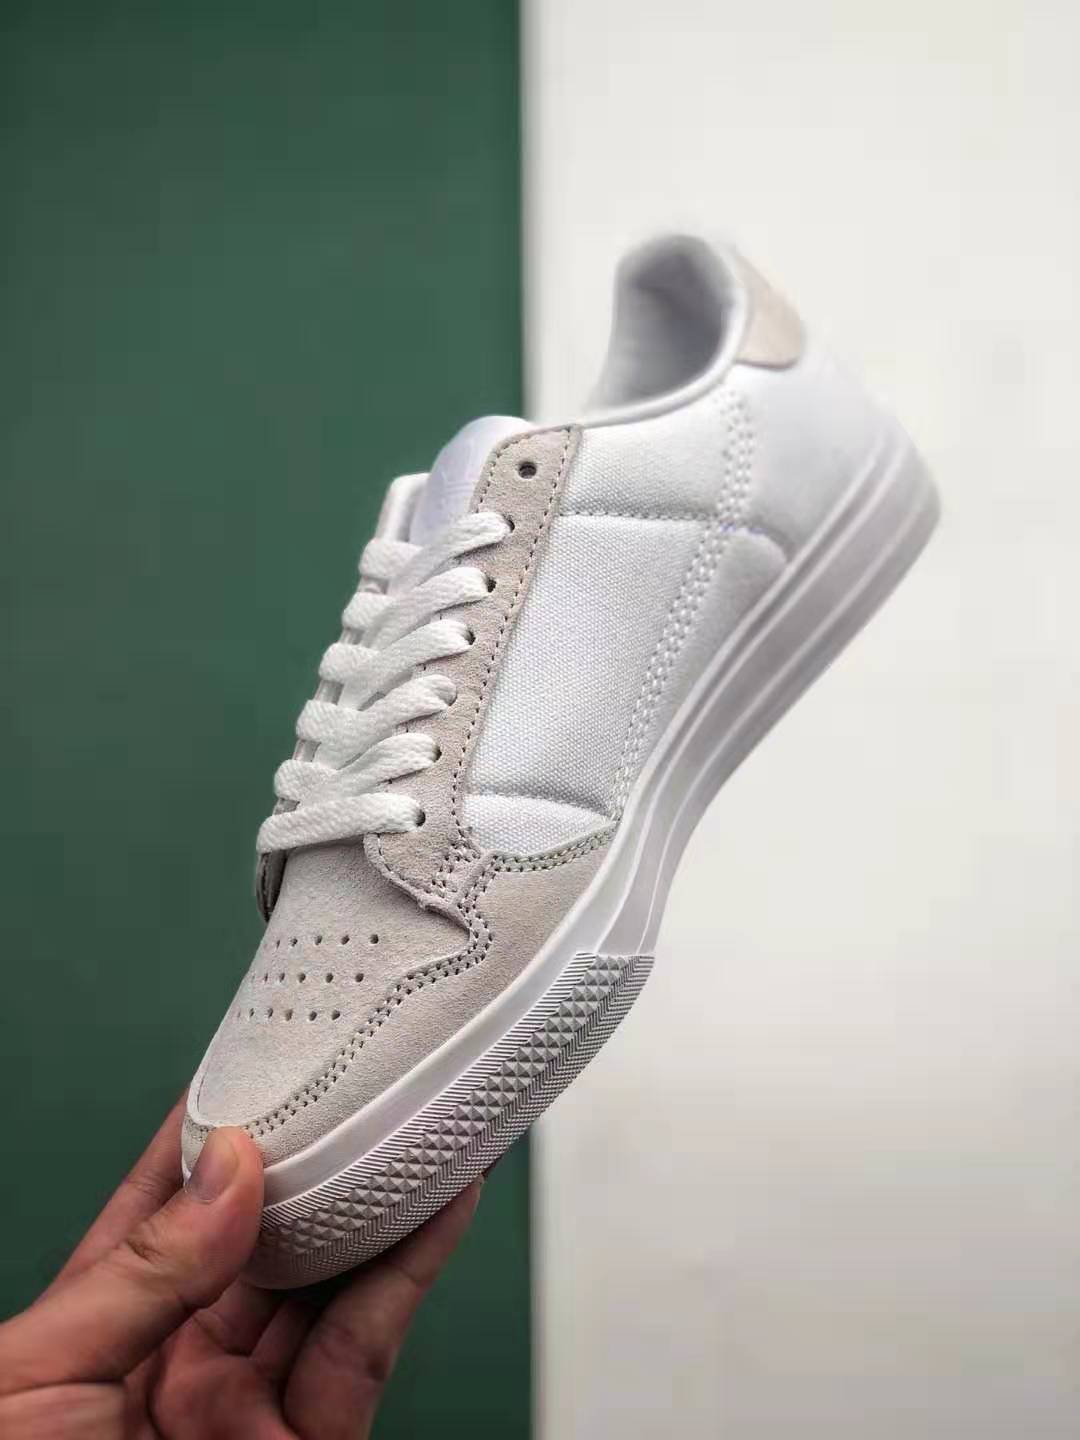 Adidas Continental Vulc Triple White EF3523 - Sleek and Stylish Sneakers!